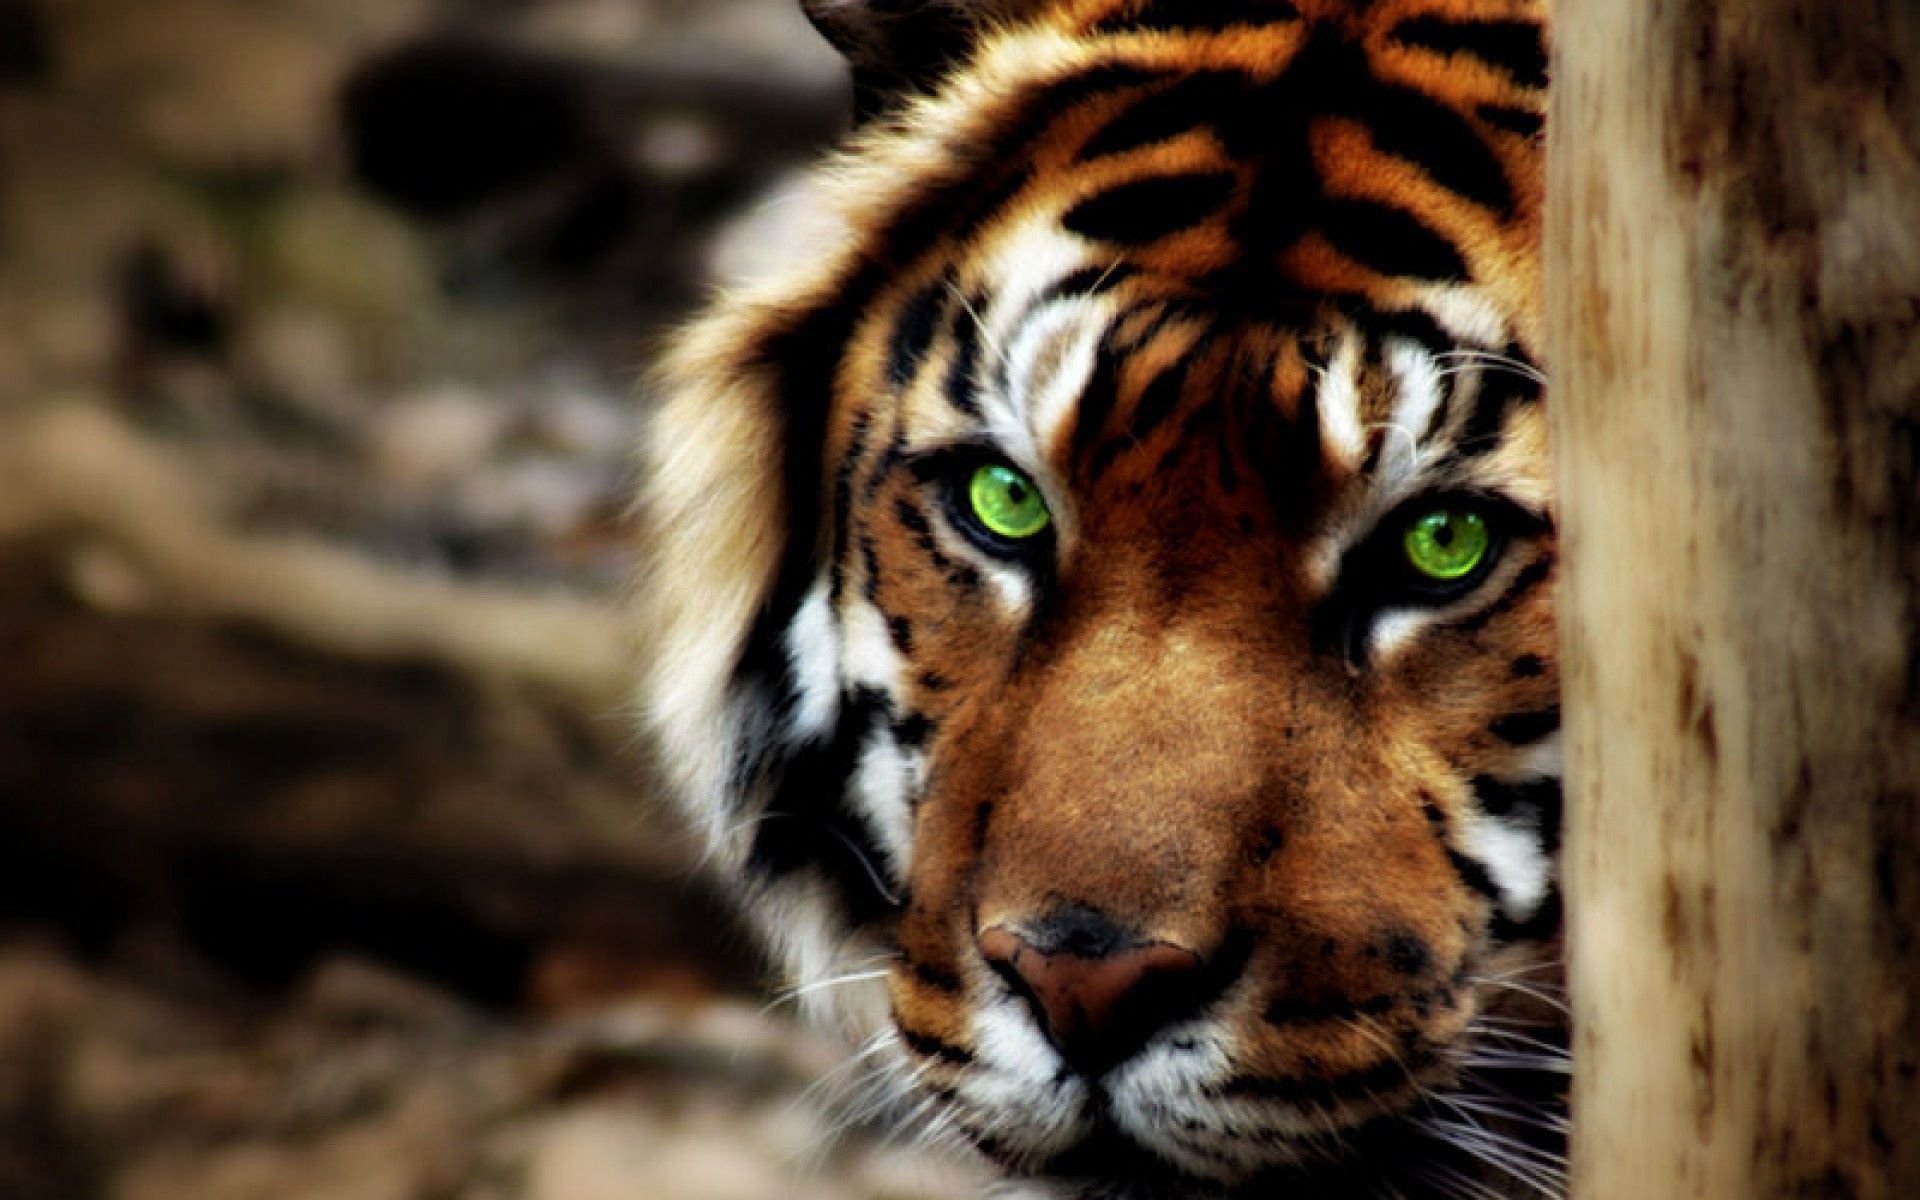 Eye of the tiger midget